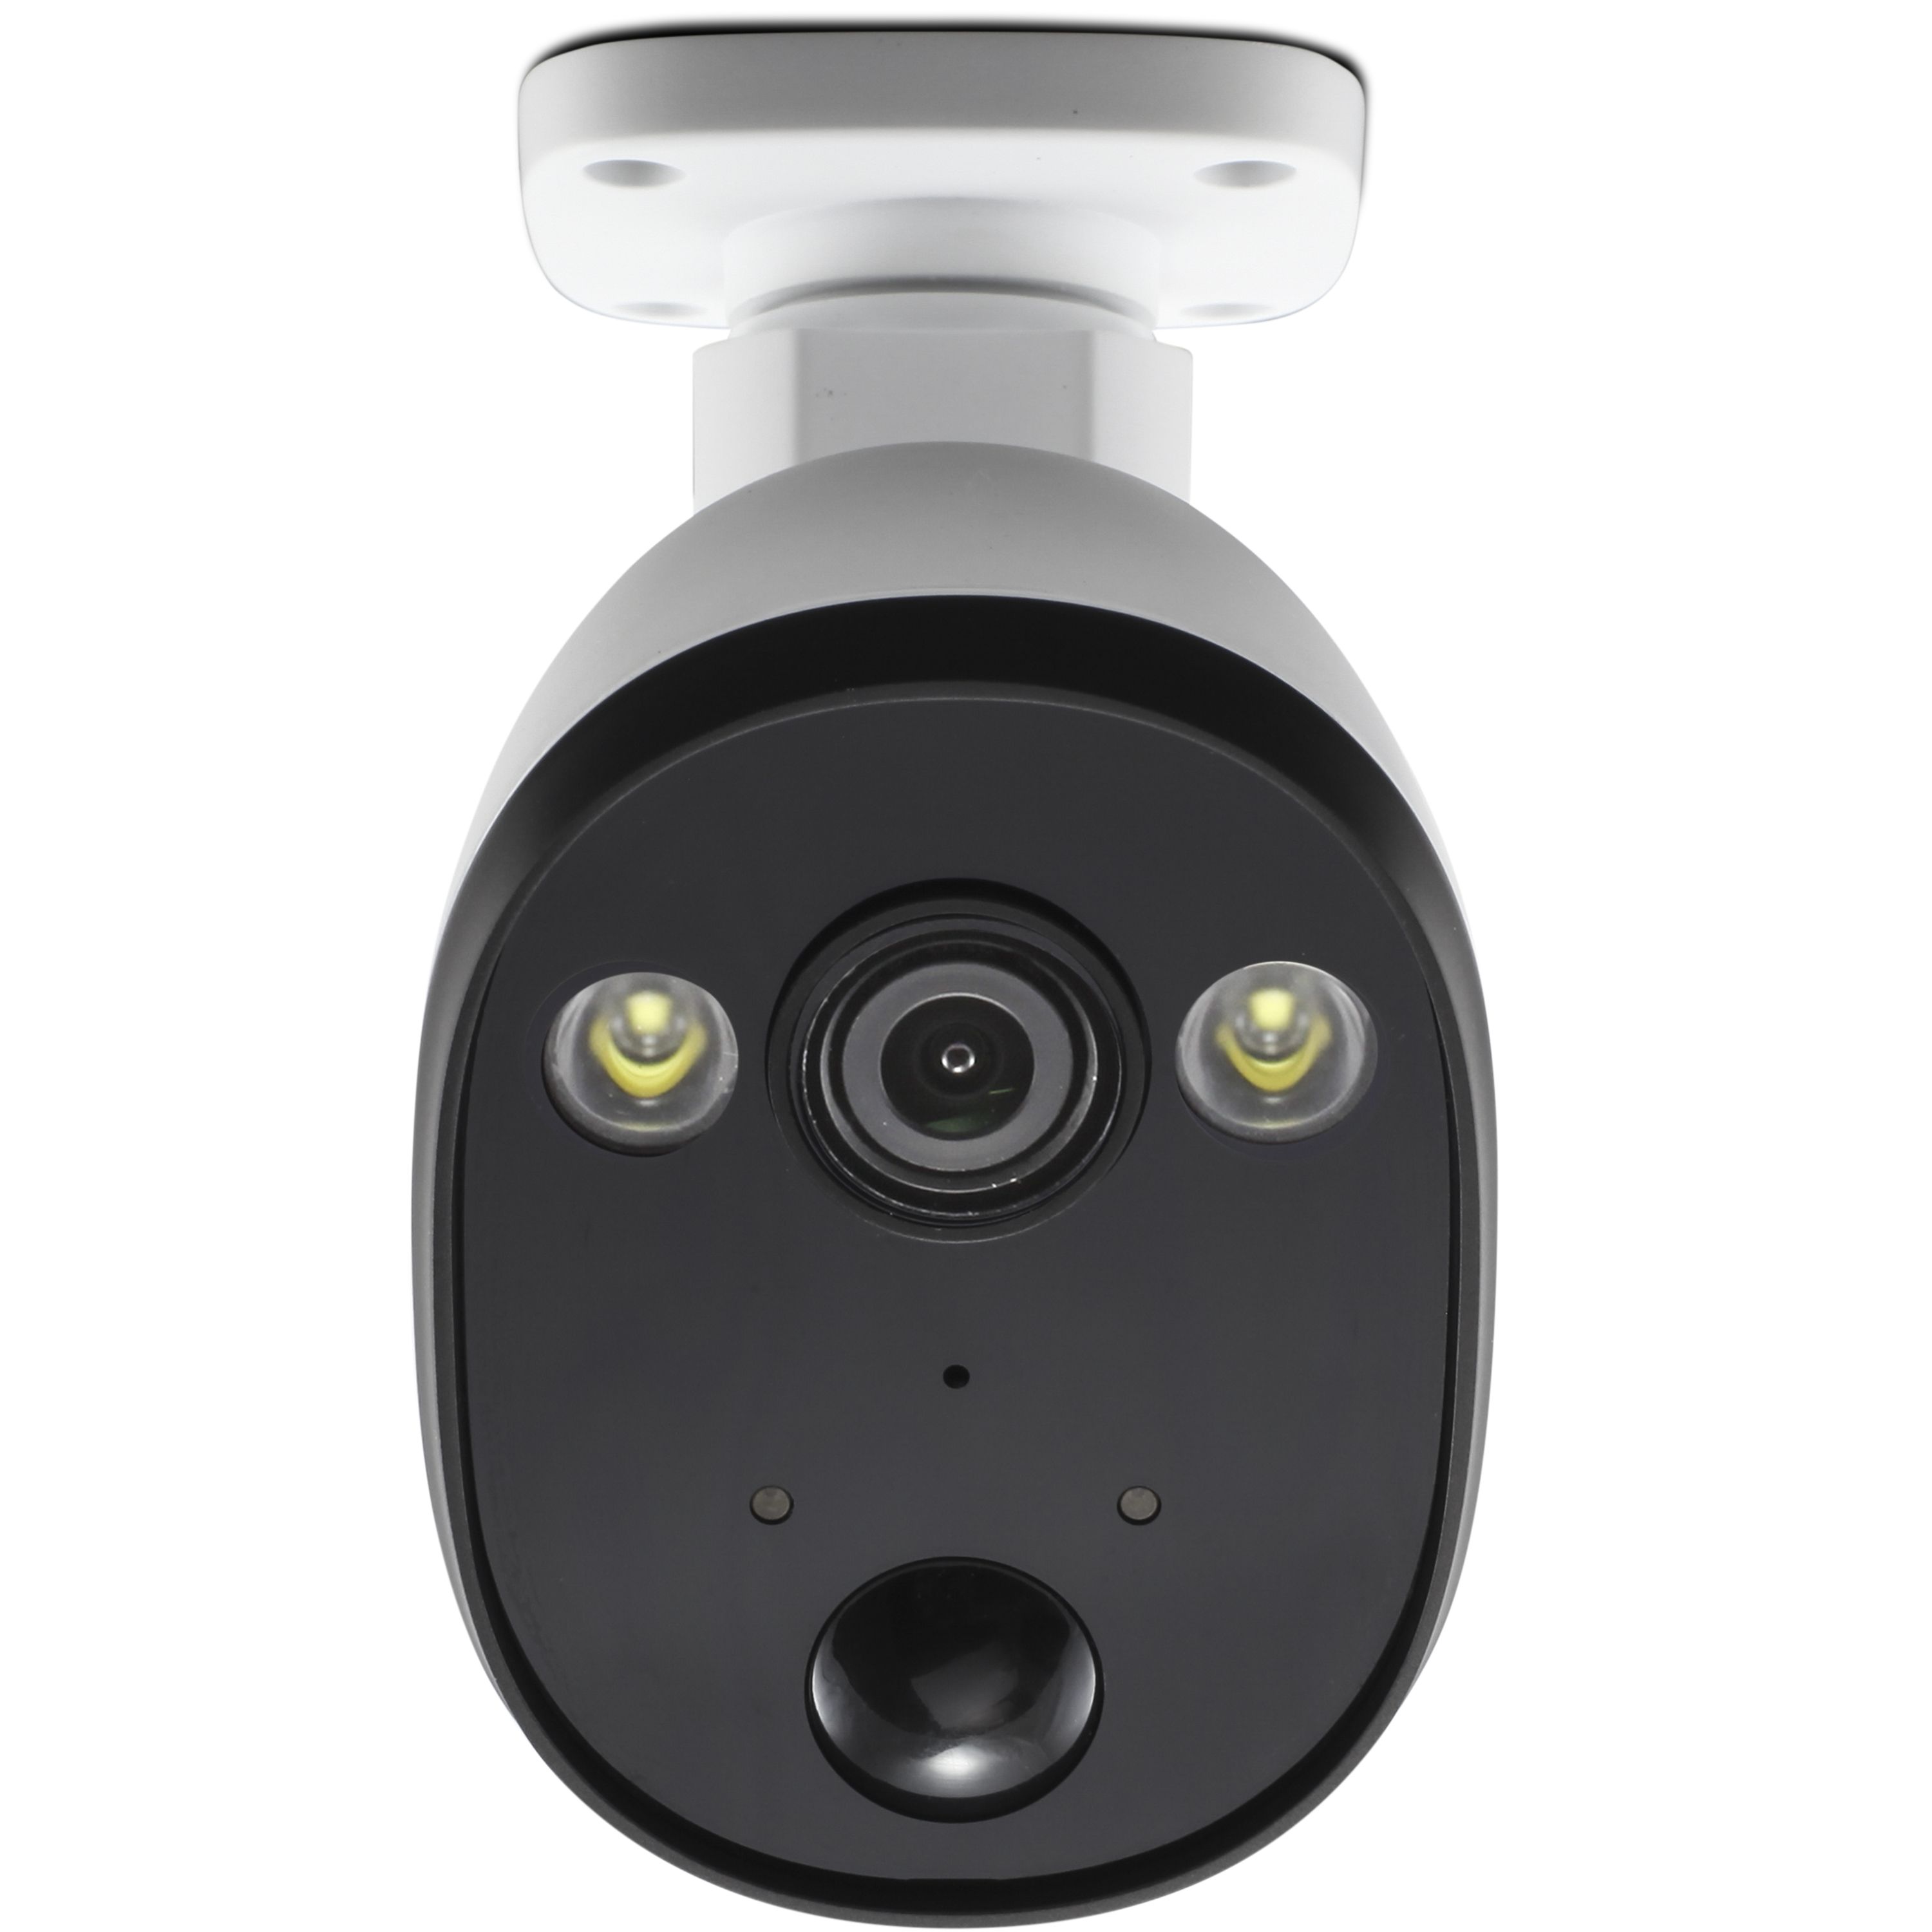 Swann SWIFI-SPOTCAM 1080p Smart White CCTV camera